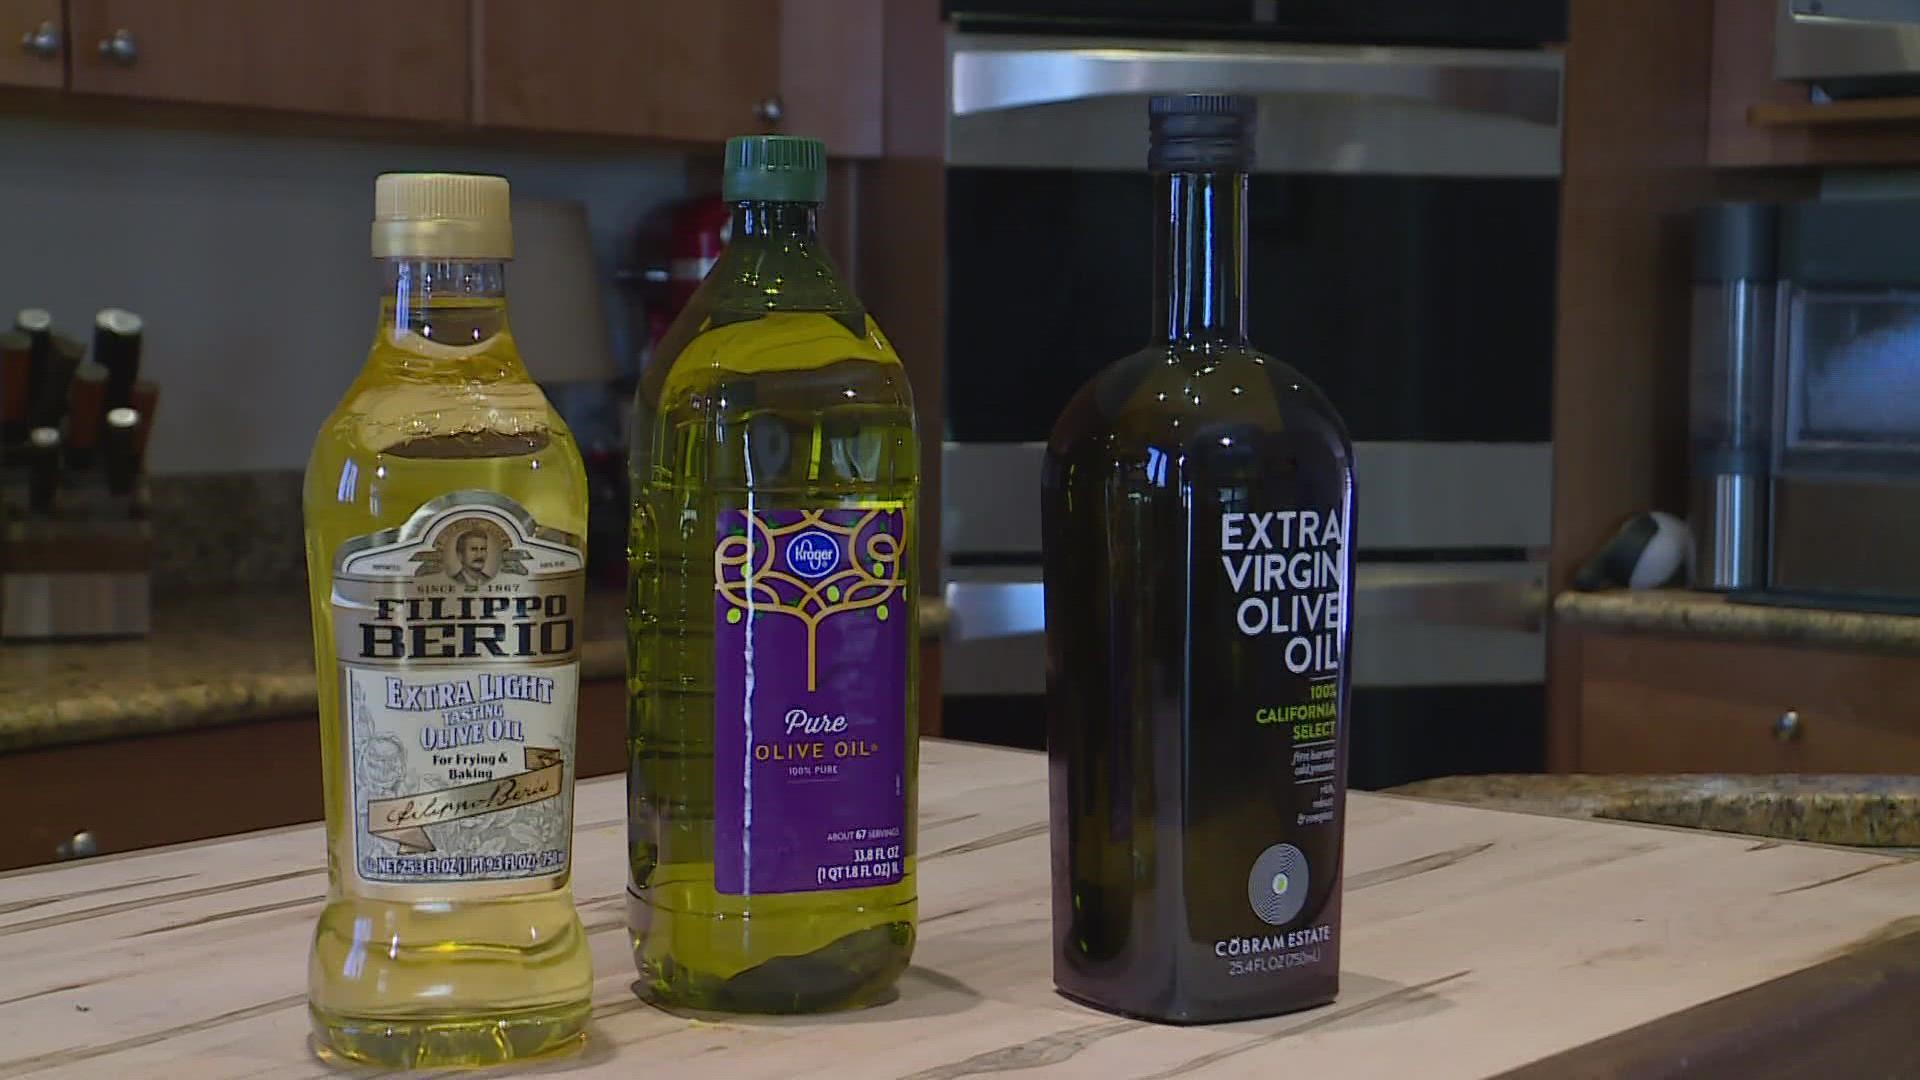 9NEWS Nutrition Expert Kristin Kirkpatrick says the benefits of extra virgin olive oil are abundant.